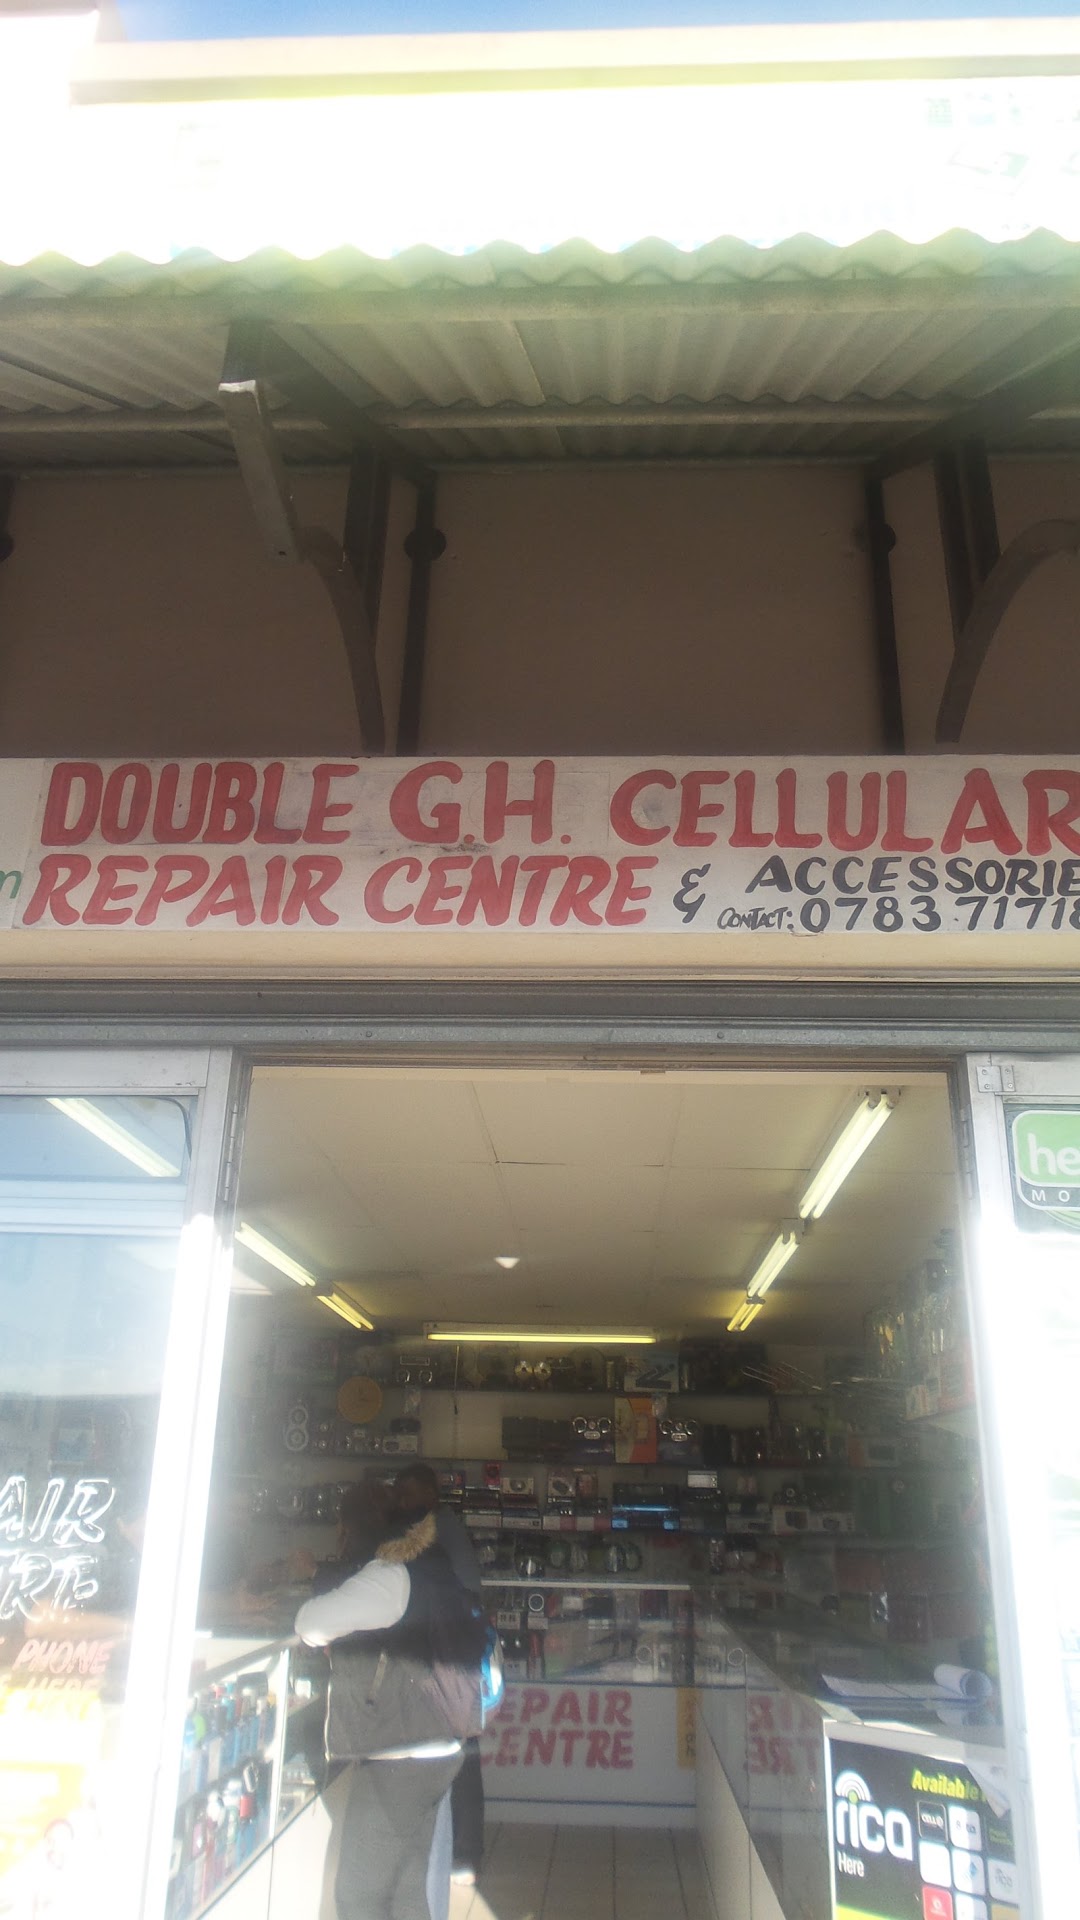 Double GH Cellular Repair Centre